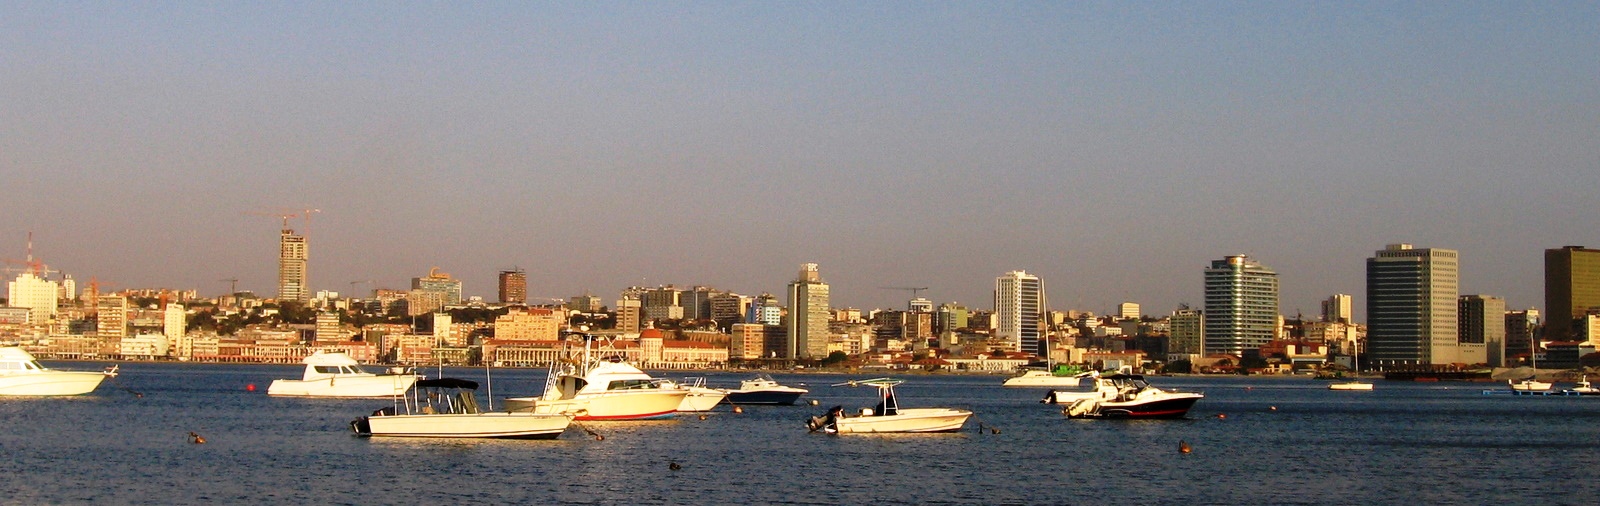 Bay of Luanda (c) Paulo Cesar Santos 3.0